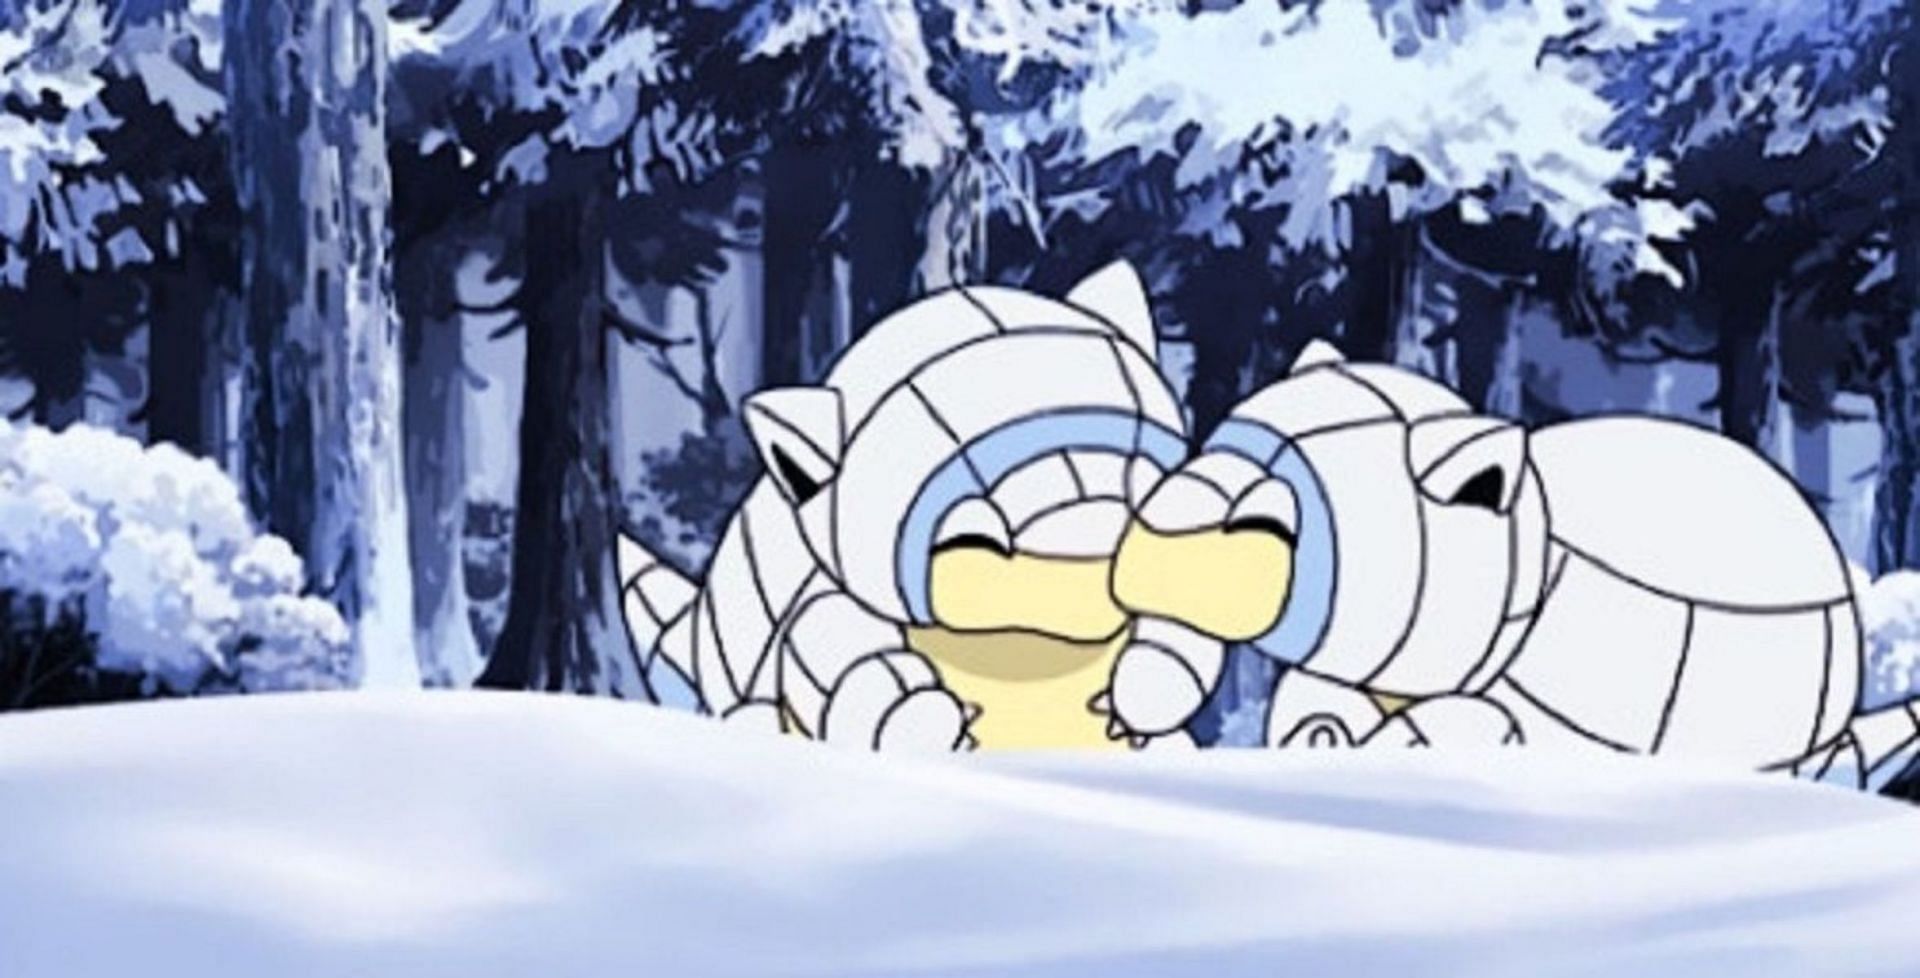 Unlike its Kanto counterpart, Alolan Sandshrew is an Ice-type (Image via The Pokemon Company)